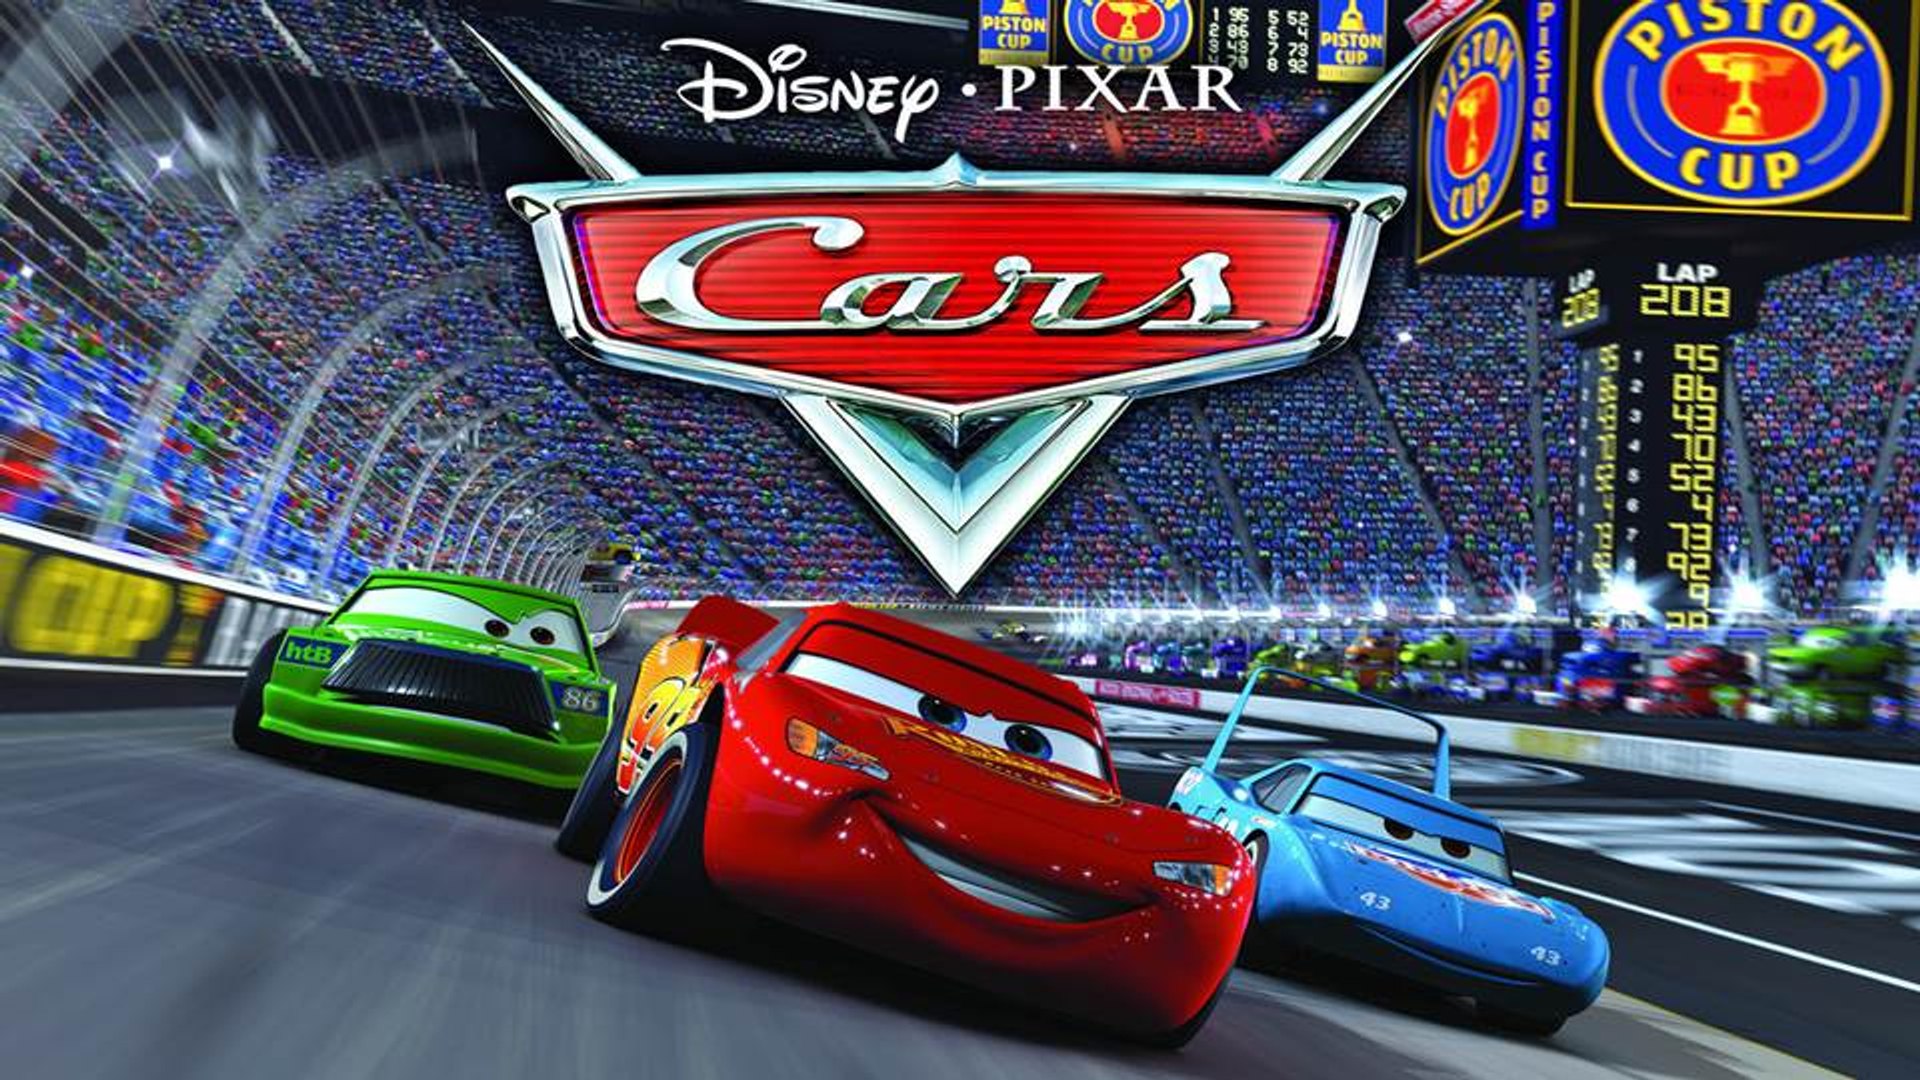 Disney Pixar Cars 2 Online Game Playing ディズニーピクサーカーズ２のオンラインゲームで遊んでみたよ 動画 Dailymotion